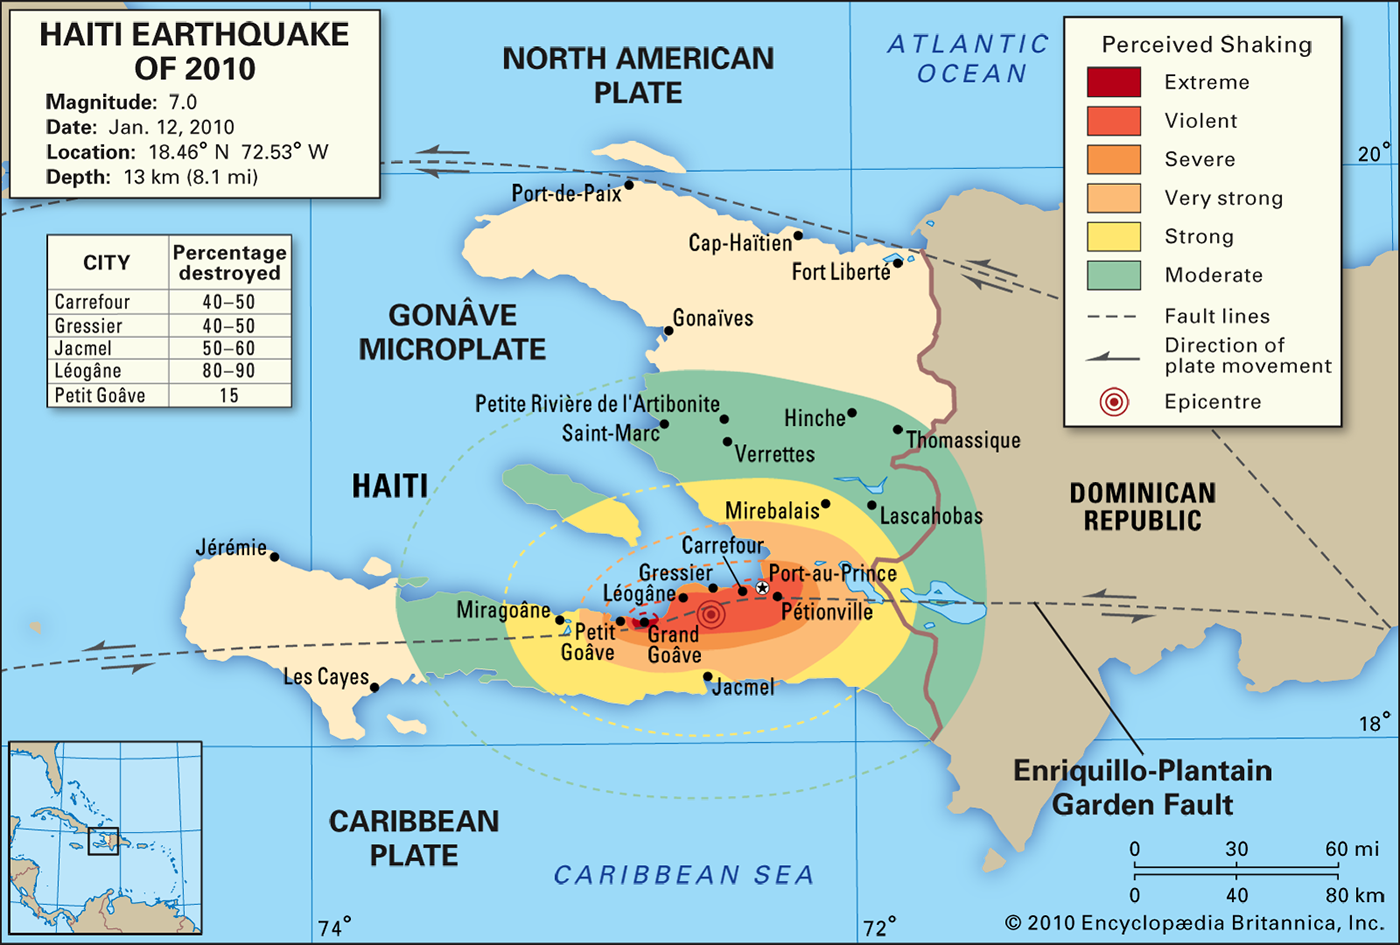 cartography map earthquake tsunami disaster New Madrid san francisco chile Haiti izmit mexico city japan peru taiwan New Zealand